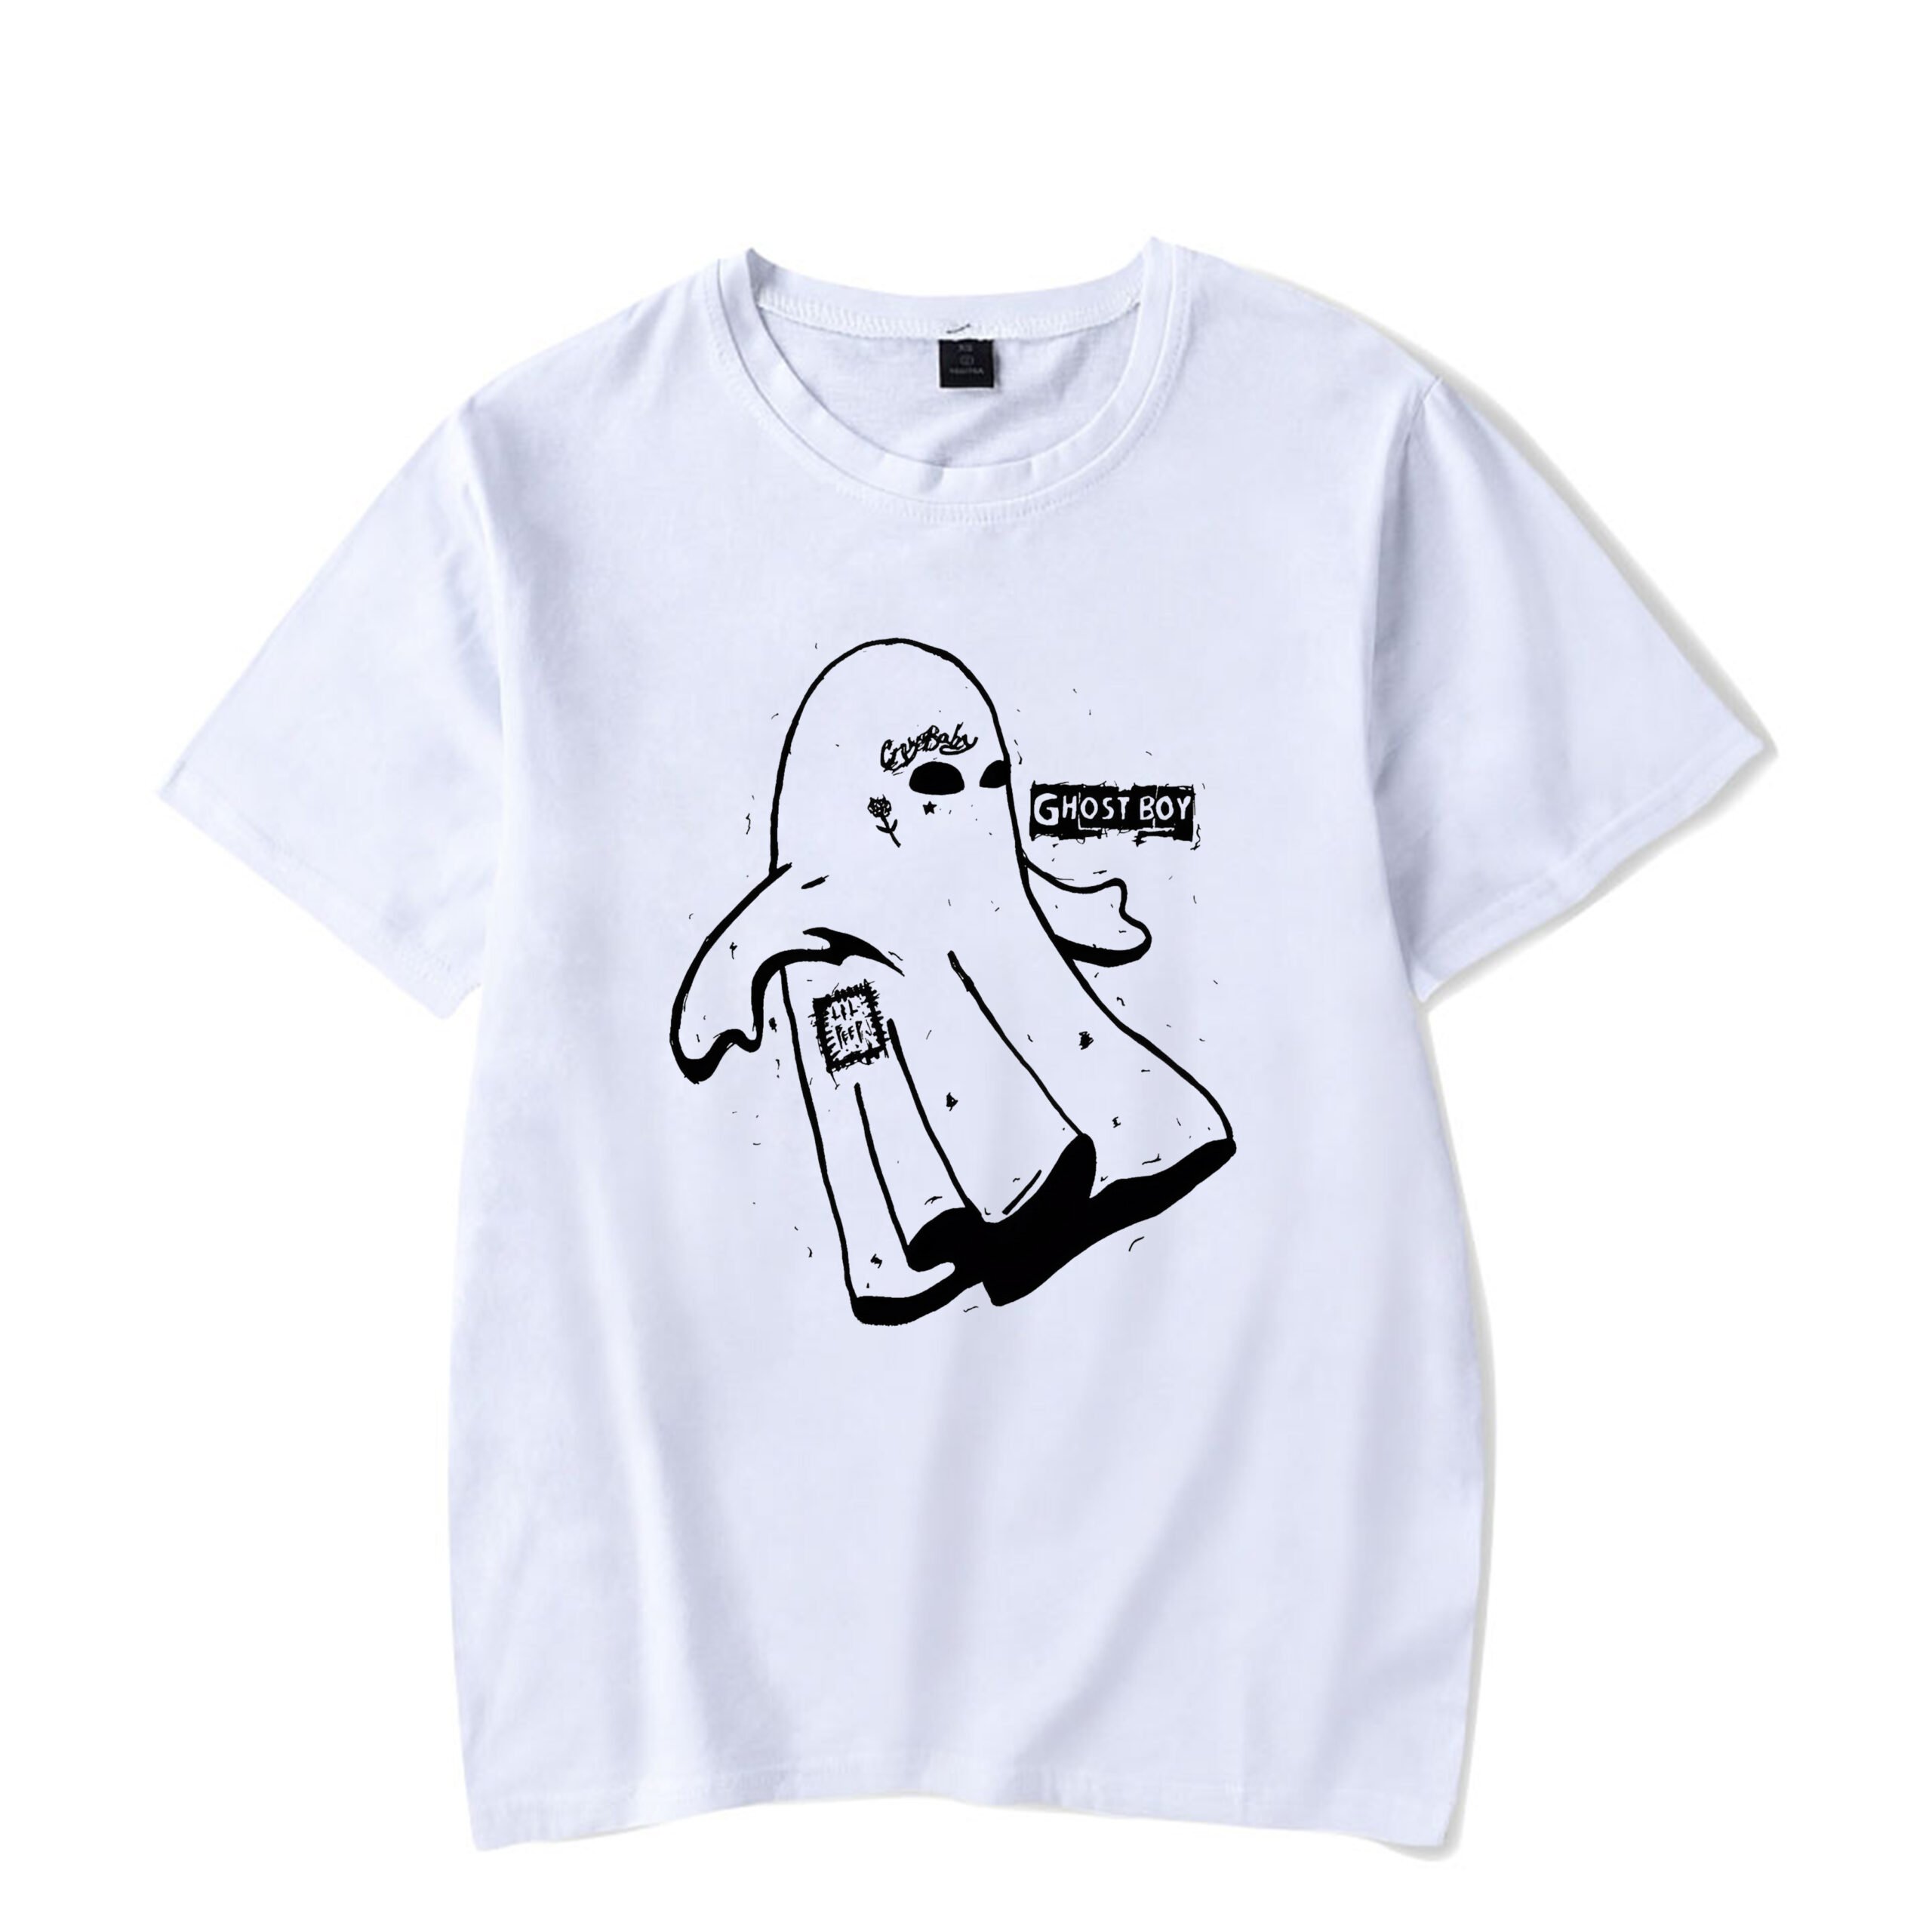 ghost boy t shirt 5475 - Purpled Shop